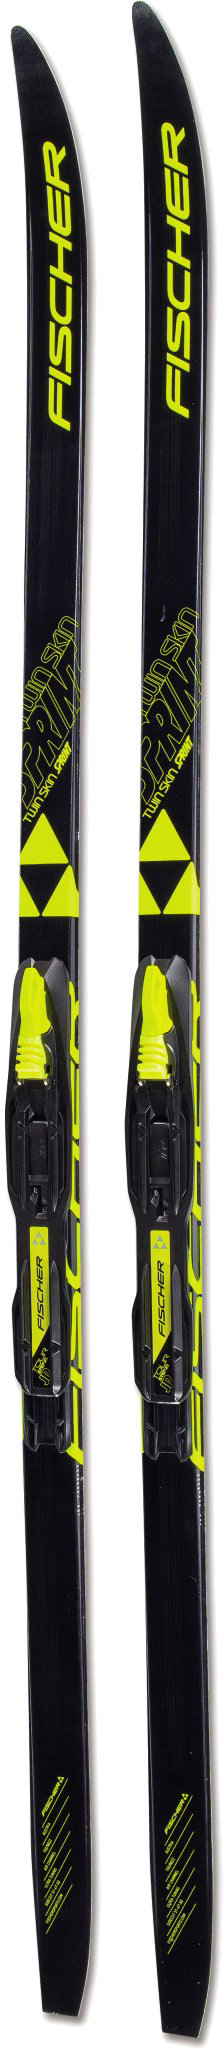 Лыжи для новичков Fischer Twin Skin Sprint IFP Jr 100 см